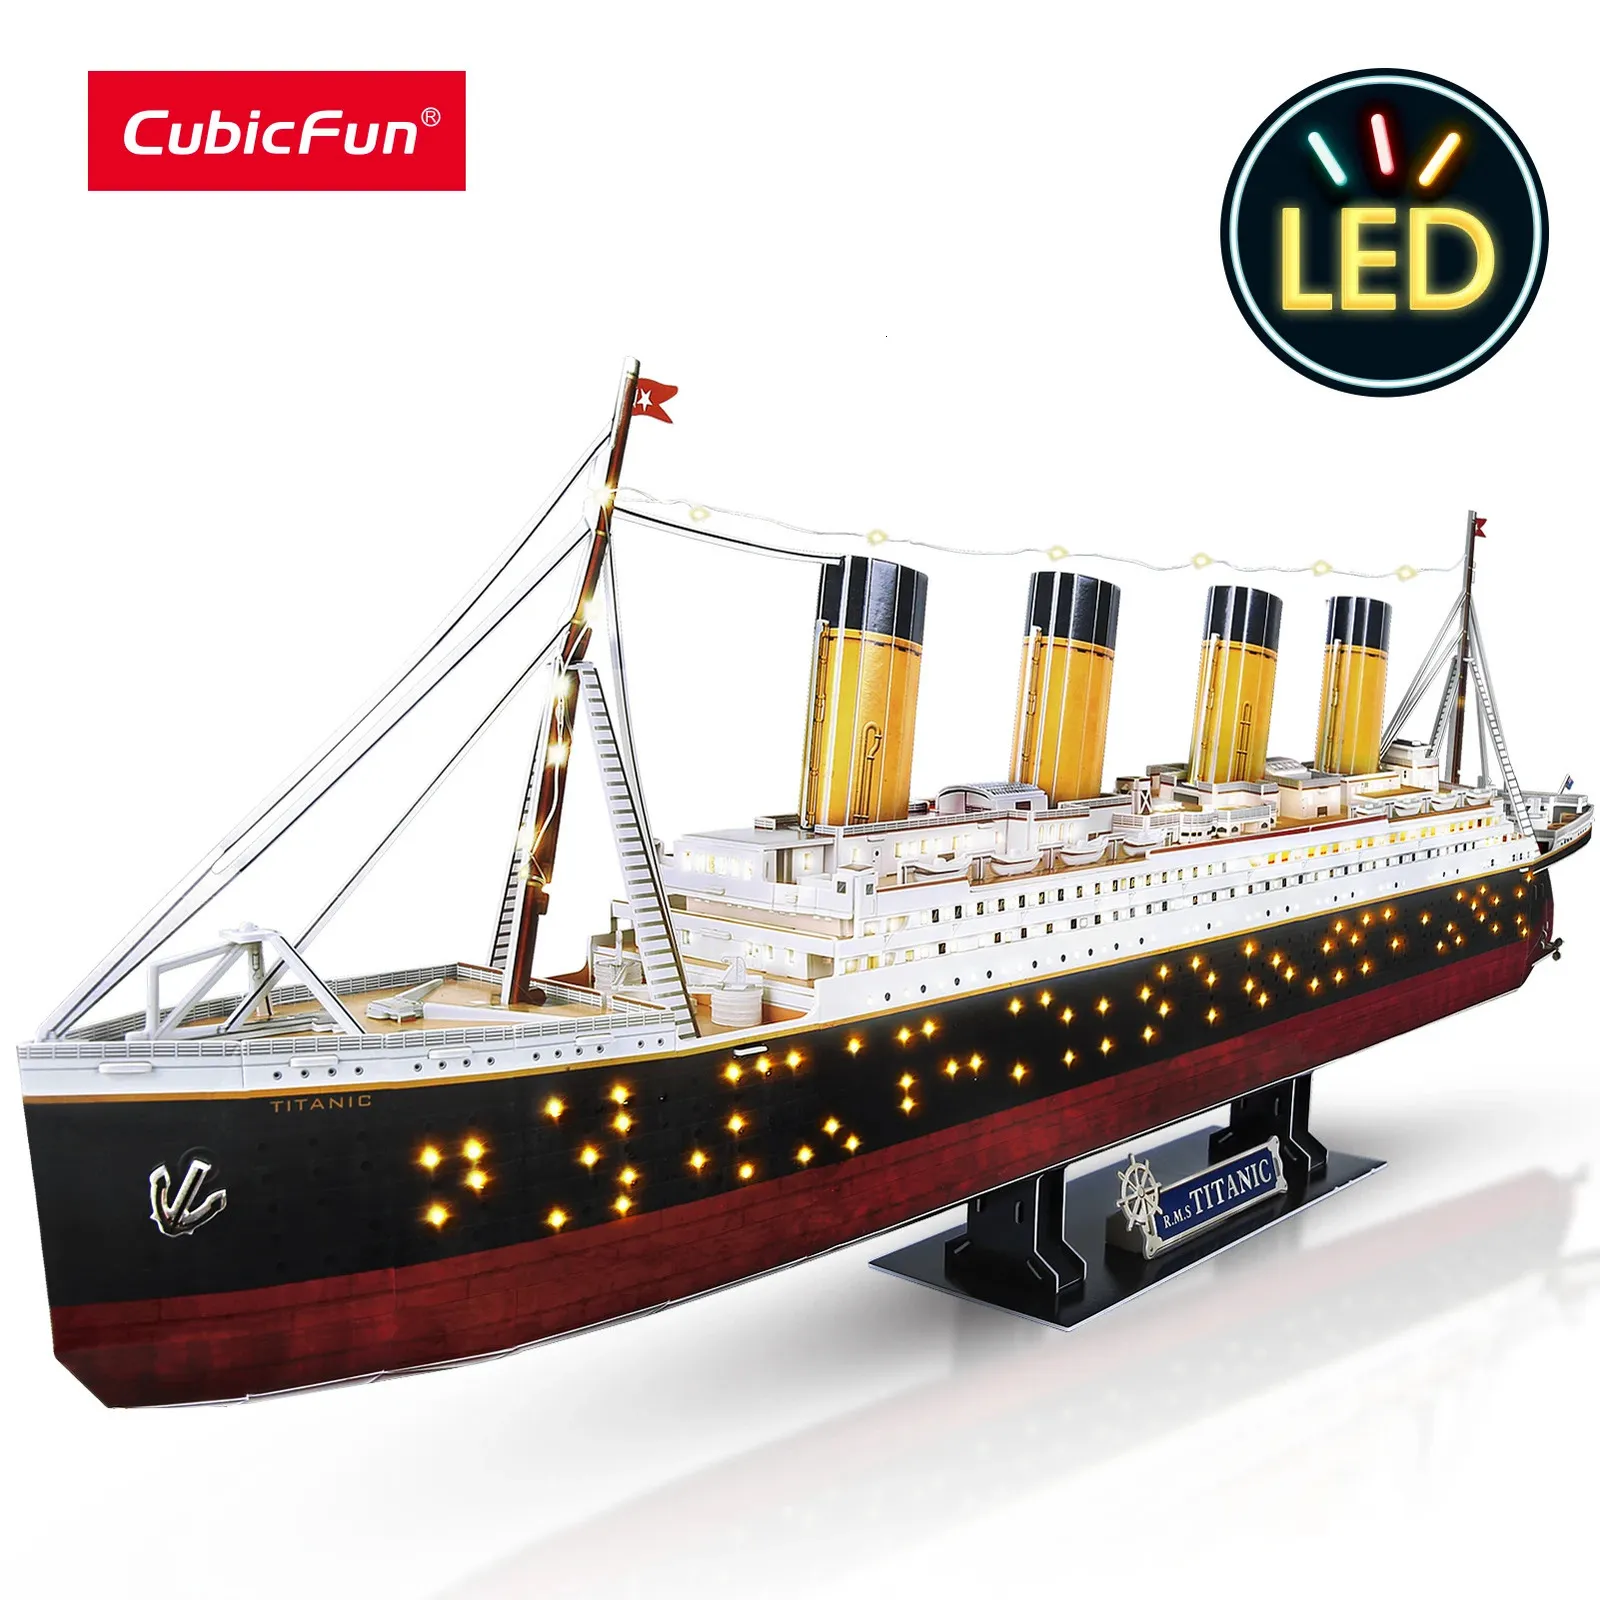 3D Puzzles cubicfun para adultos liderou o navio Titanic Modelo 266pcs Cruise Jigsaw Toys Kits Building Kits Home Decoration Gifts 231219